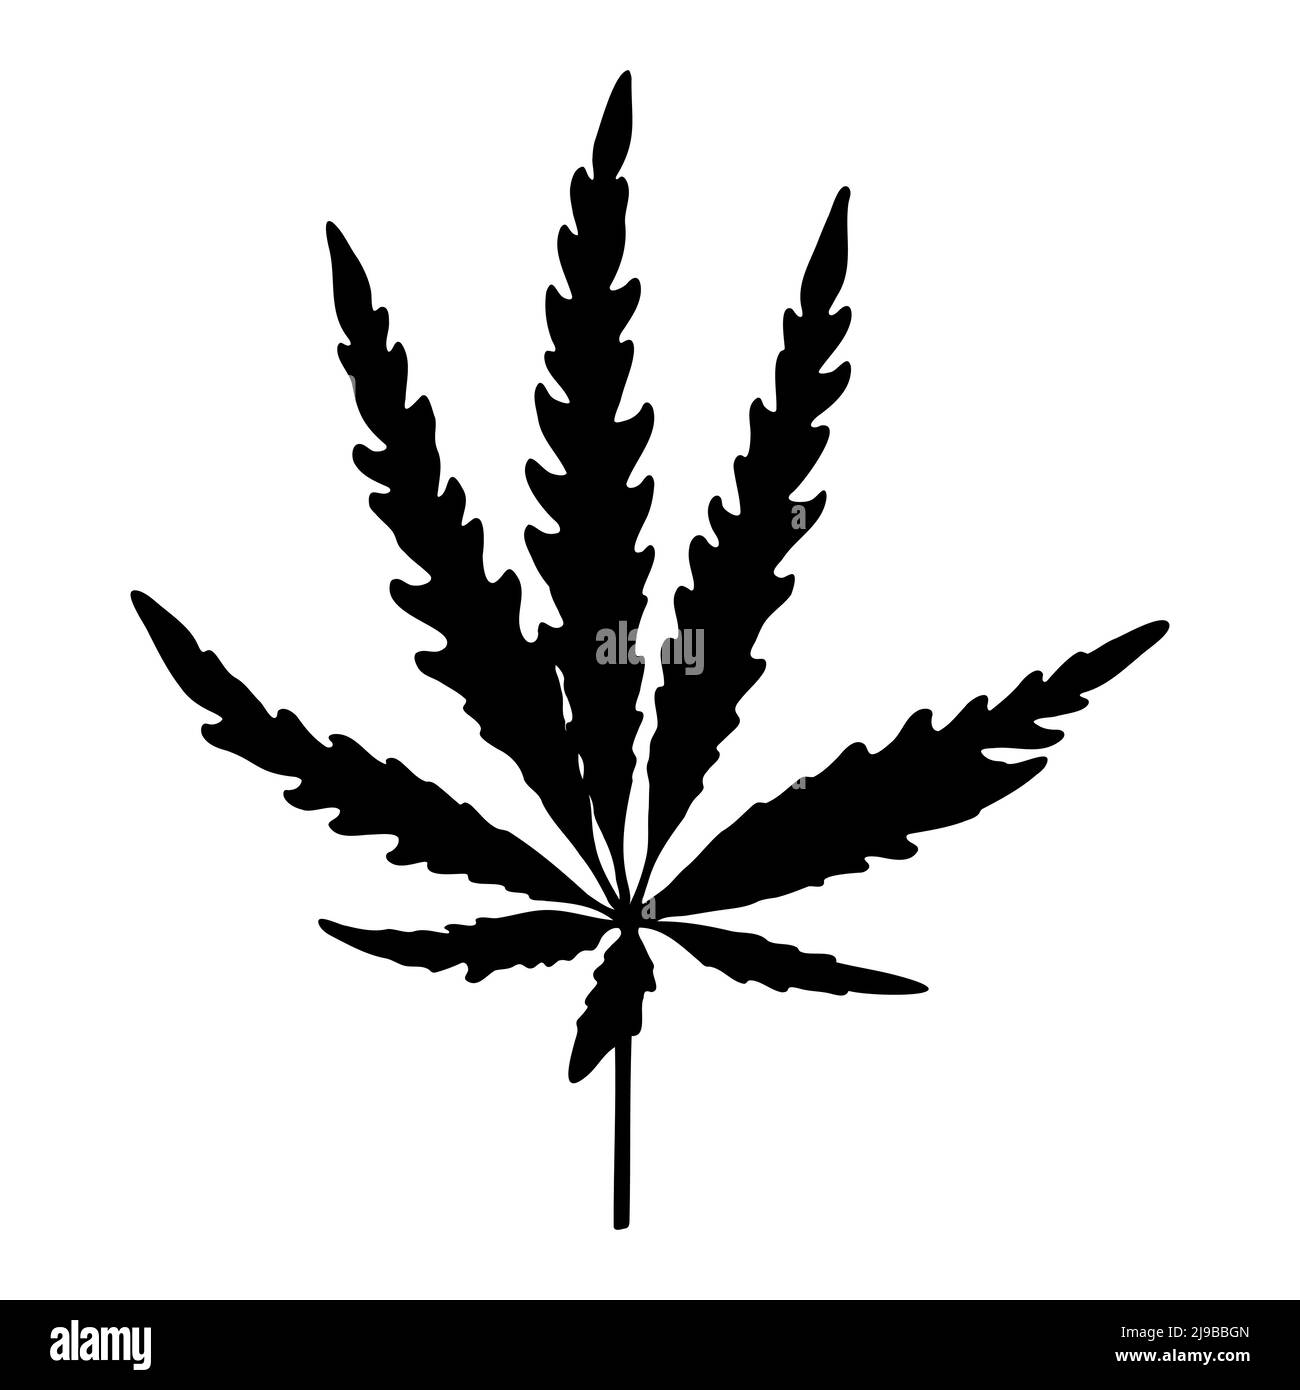 Black silhouette of marijuana leaf isolated on white background. Marijuana leaf icon or cannabis icon. Silhouette of cannabis. Vector illustration. Stock Vector